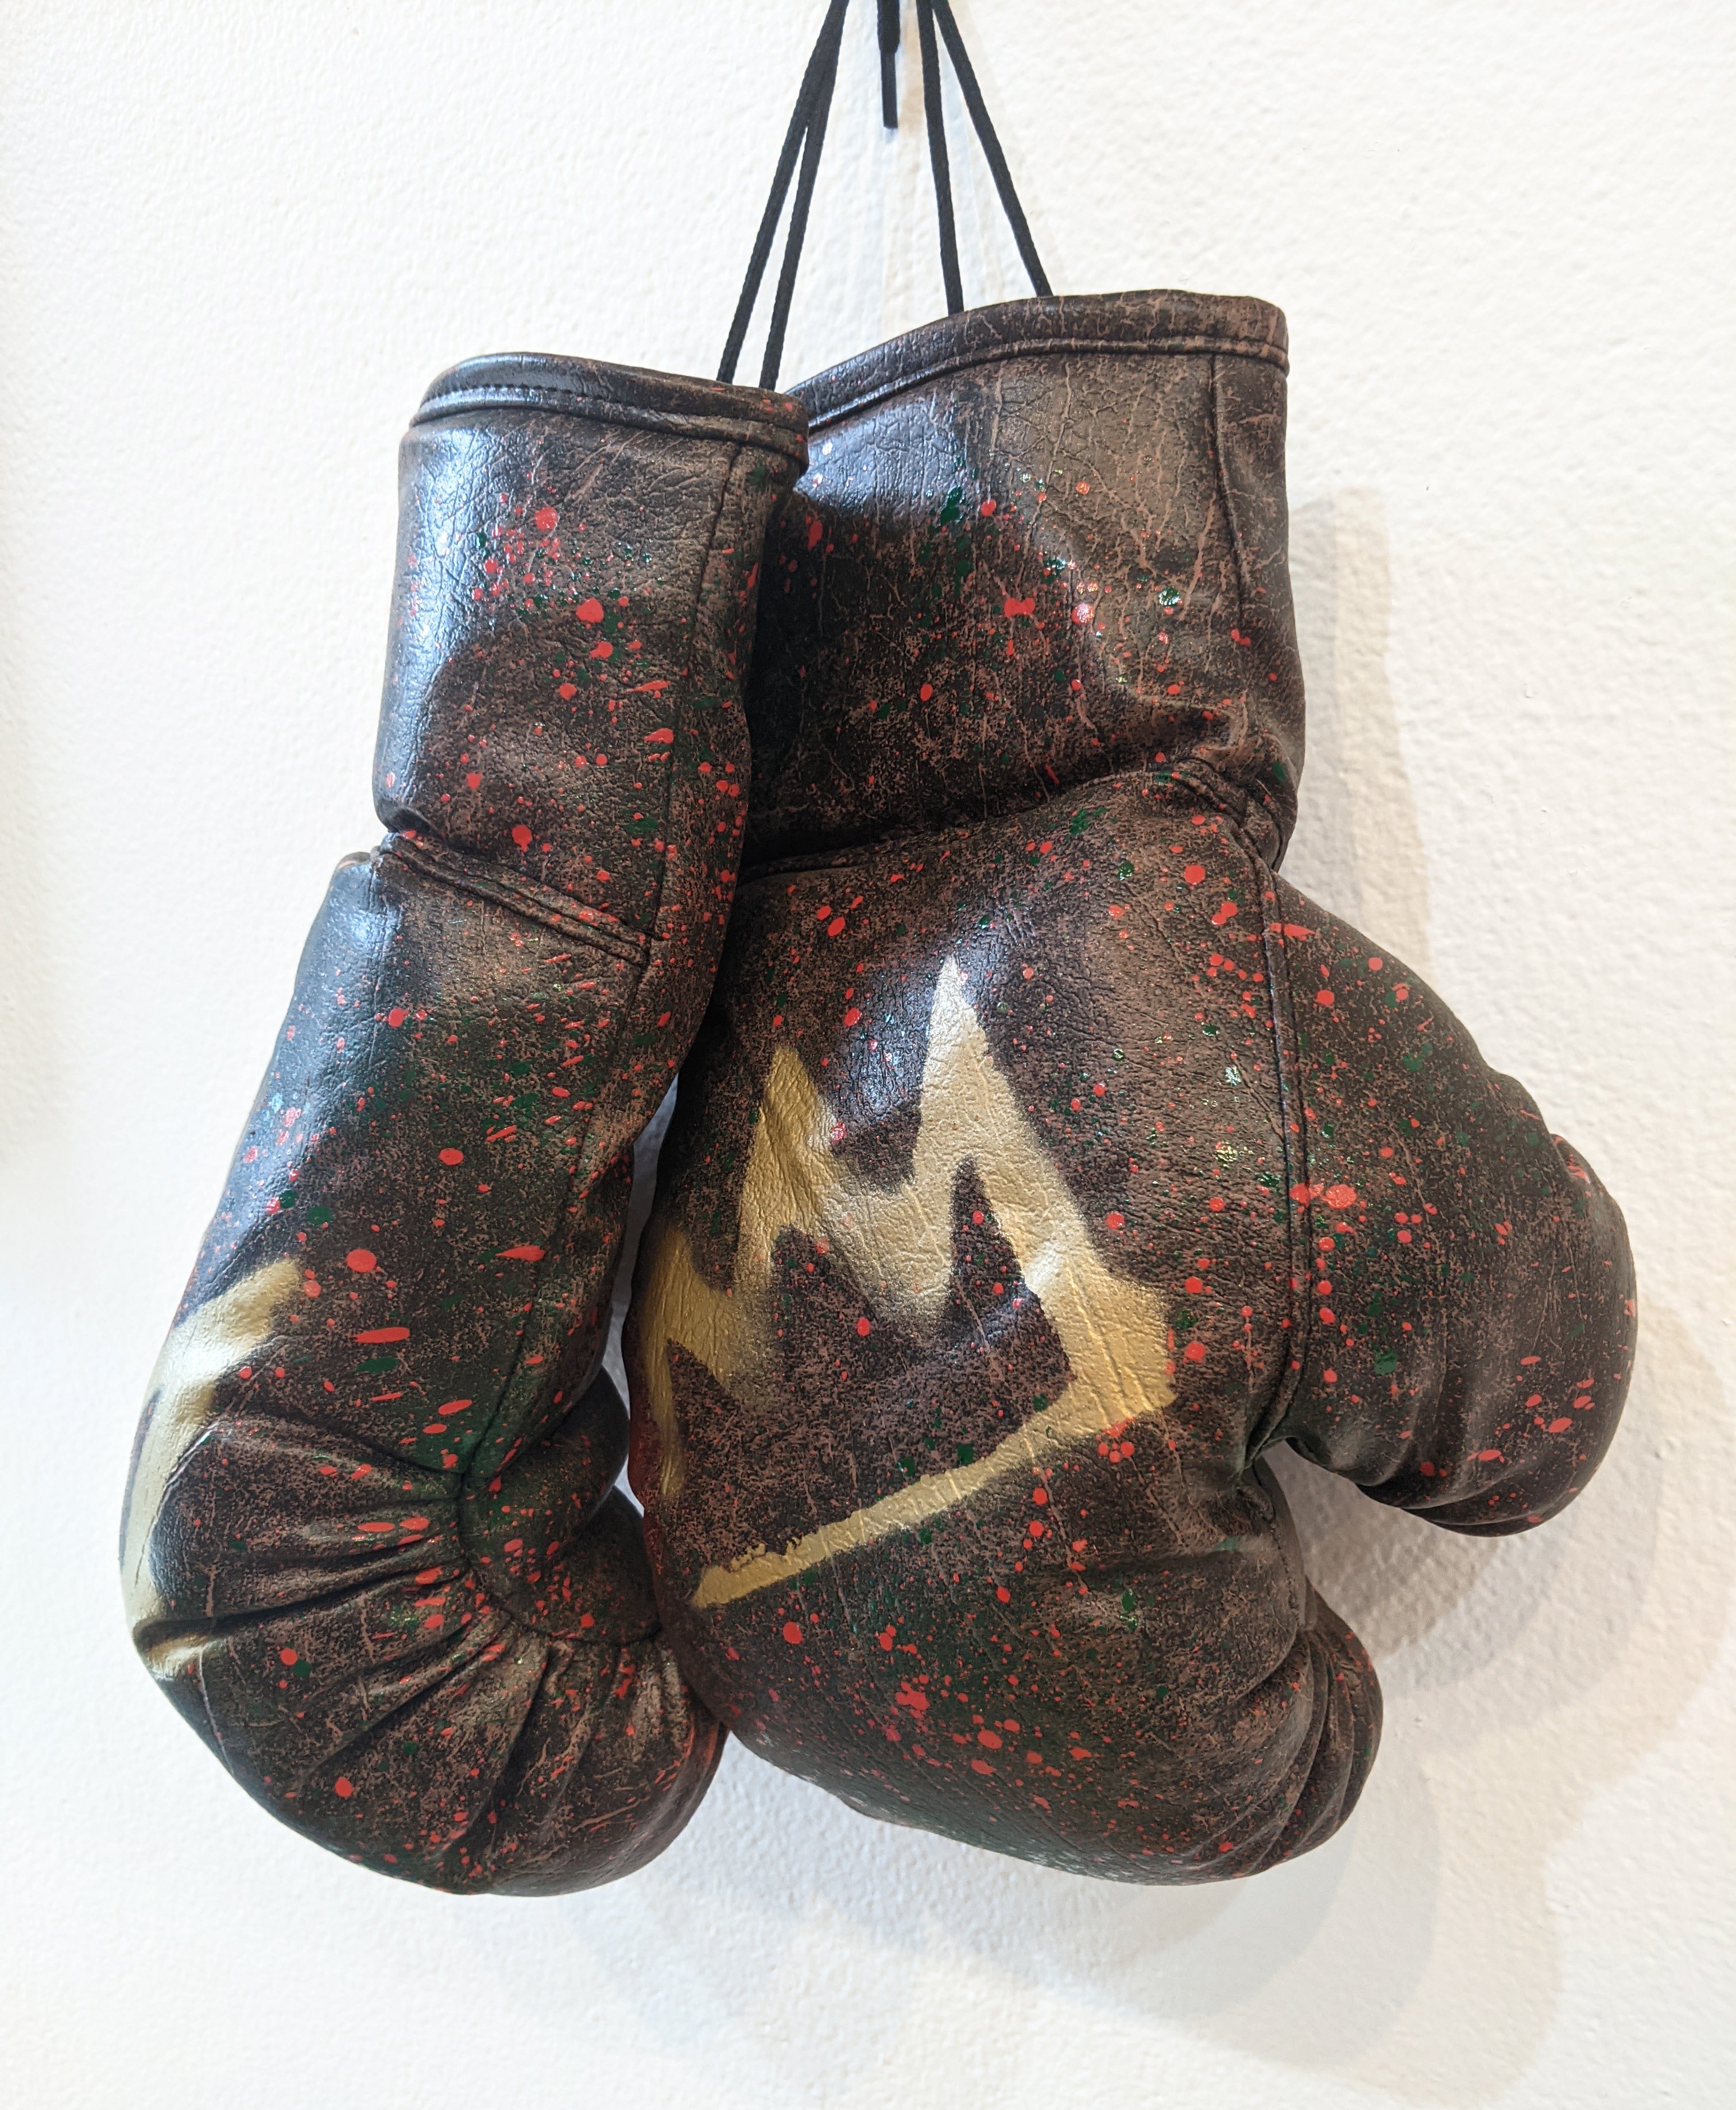 "Vintage Boxing Gloves 3" by JC Rivera